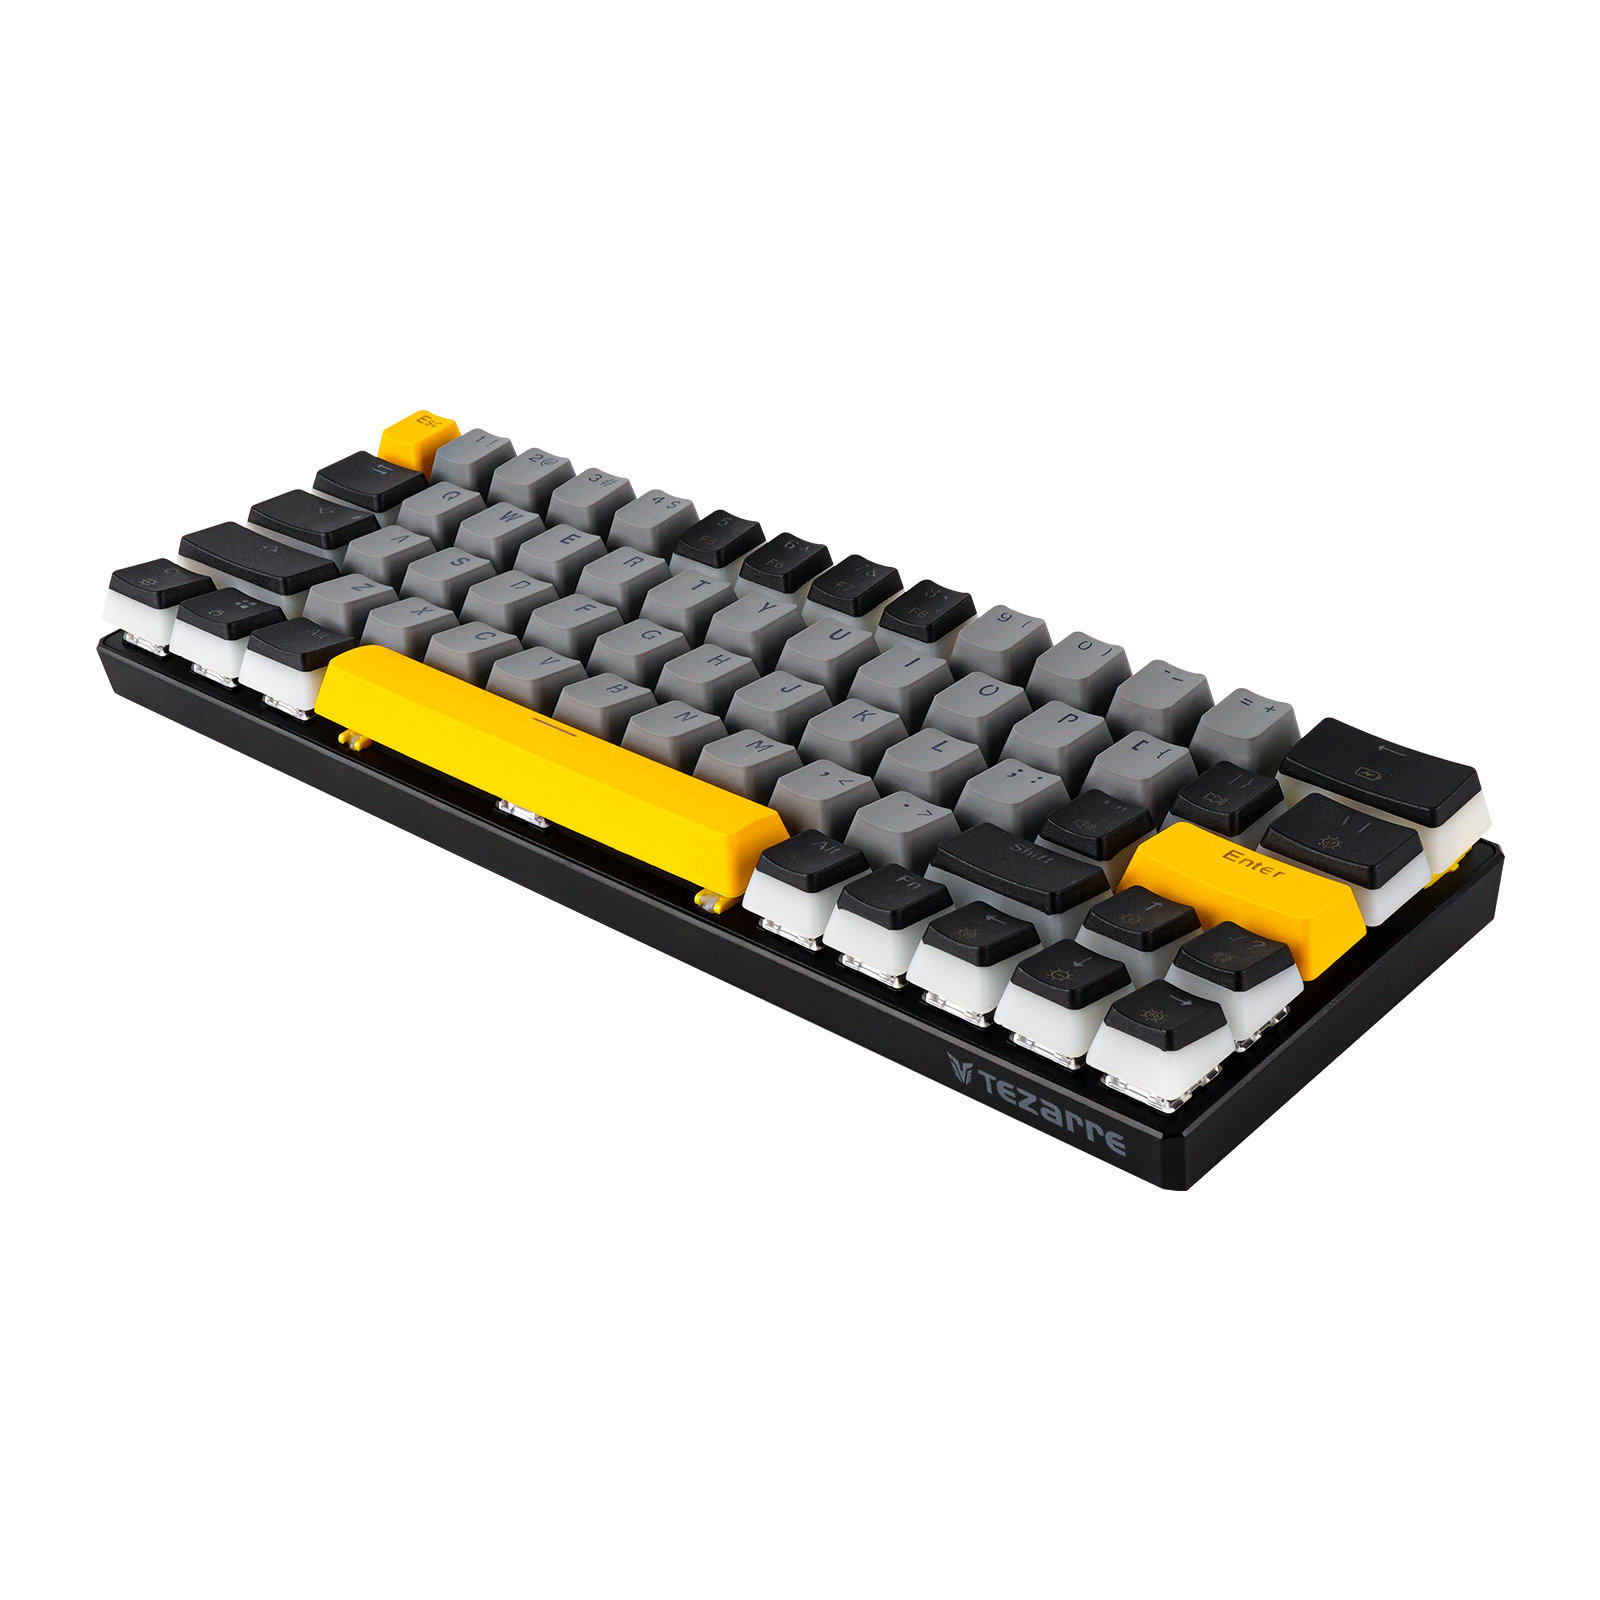 Sunset TK63 - Custom 60% Keyboard